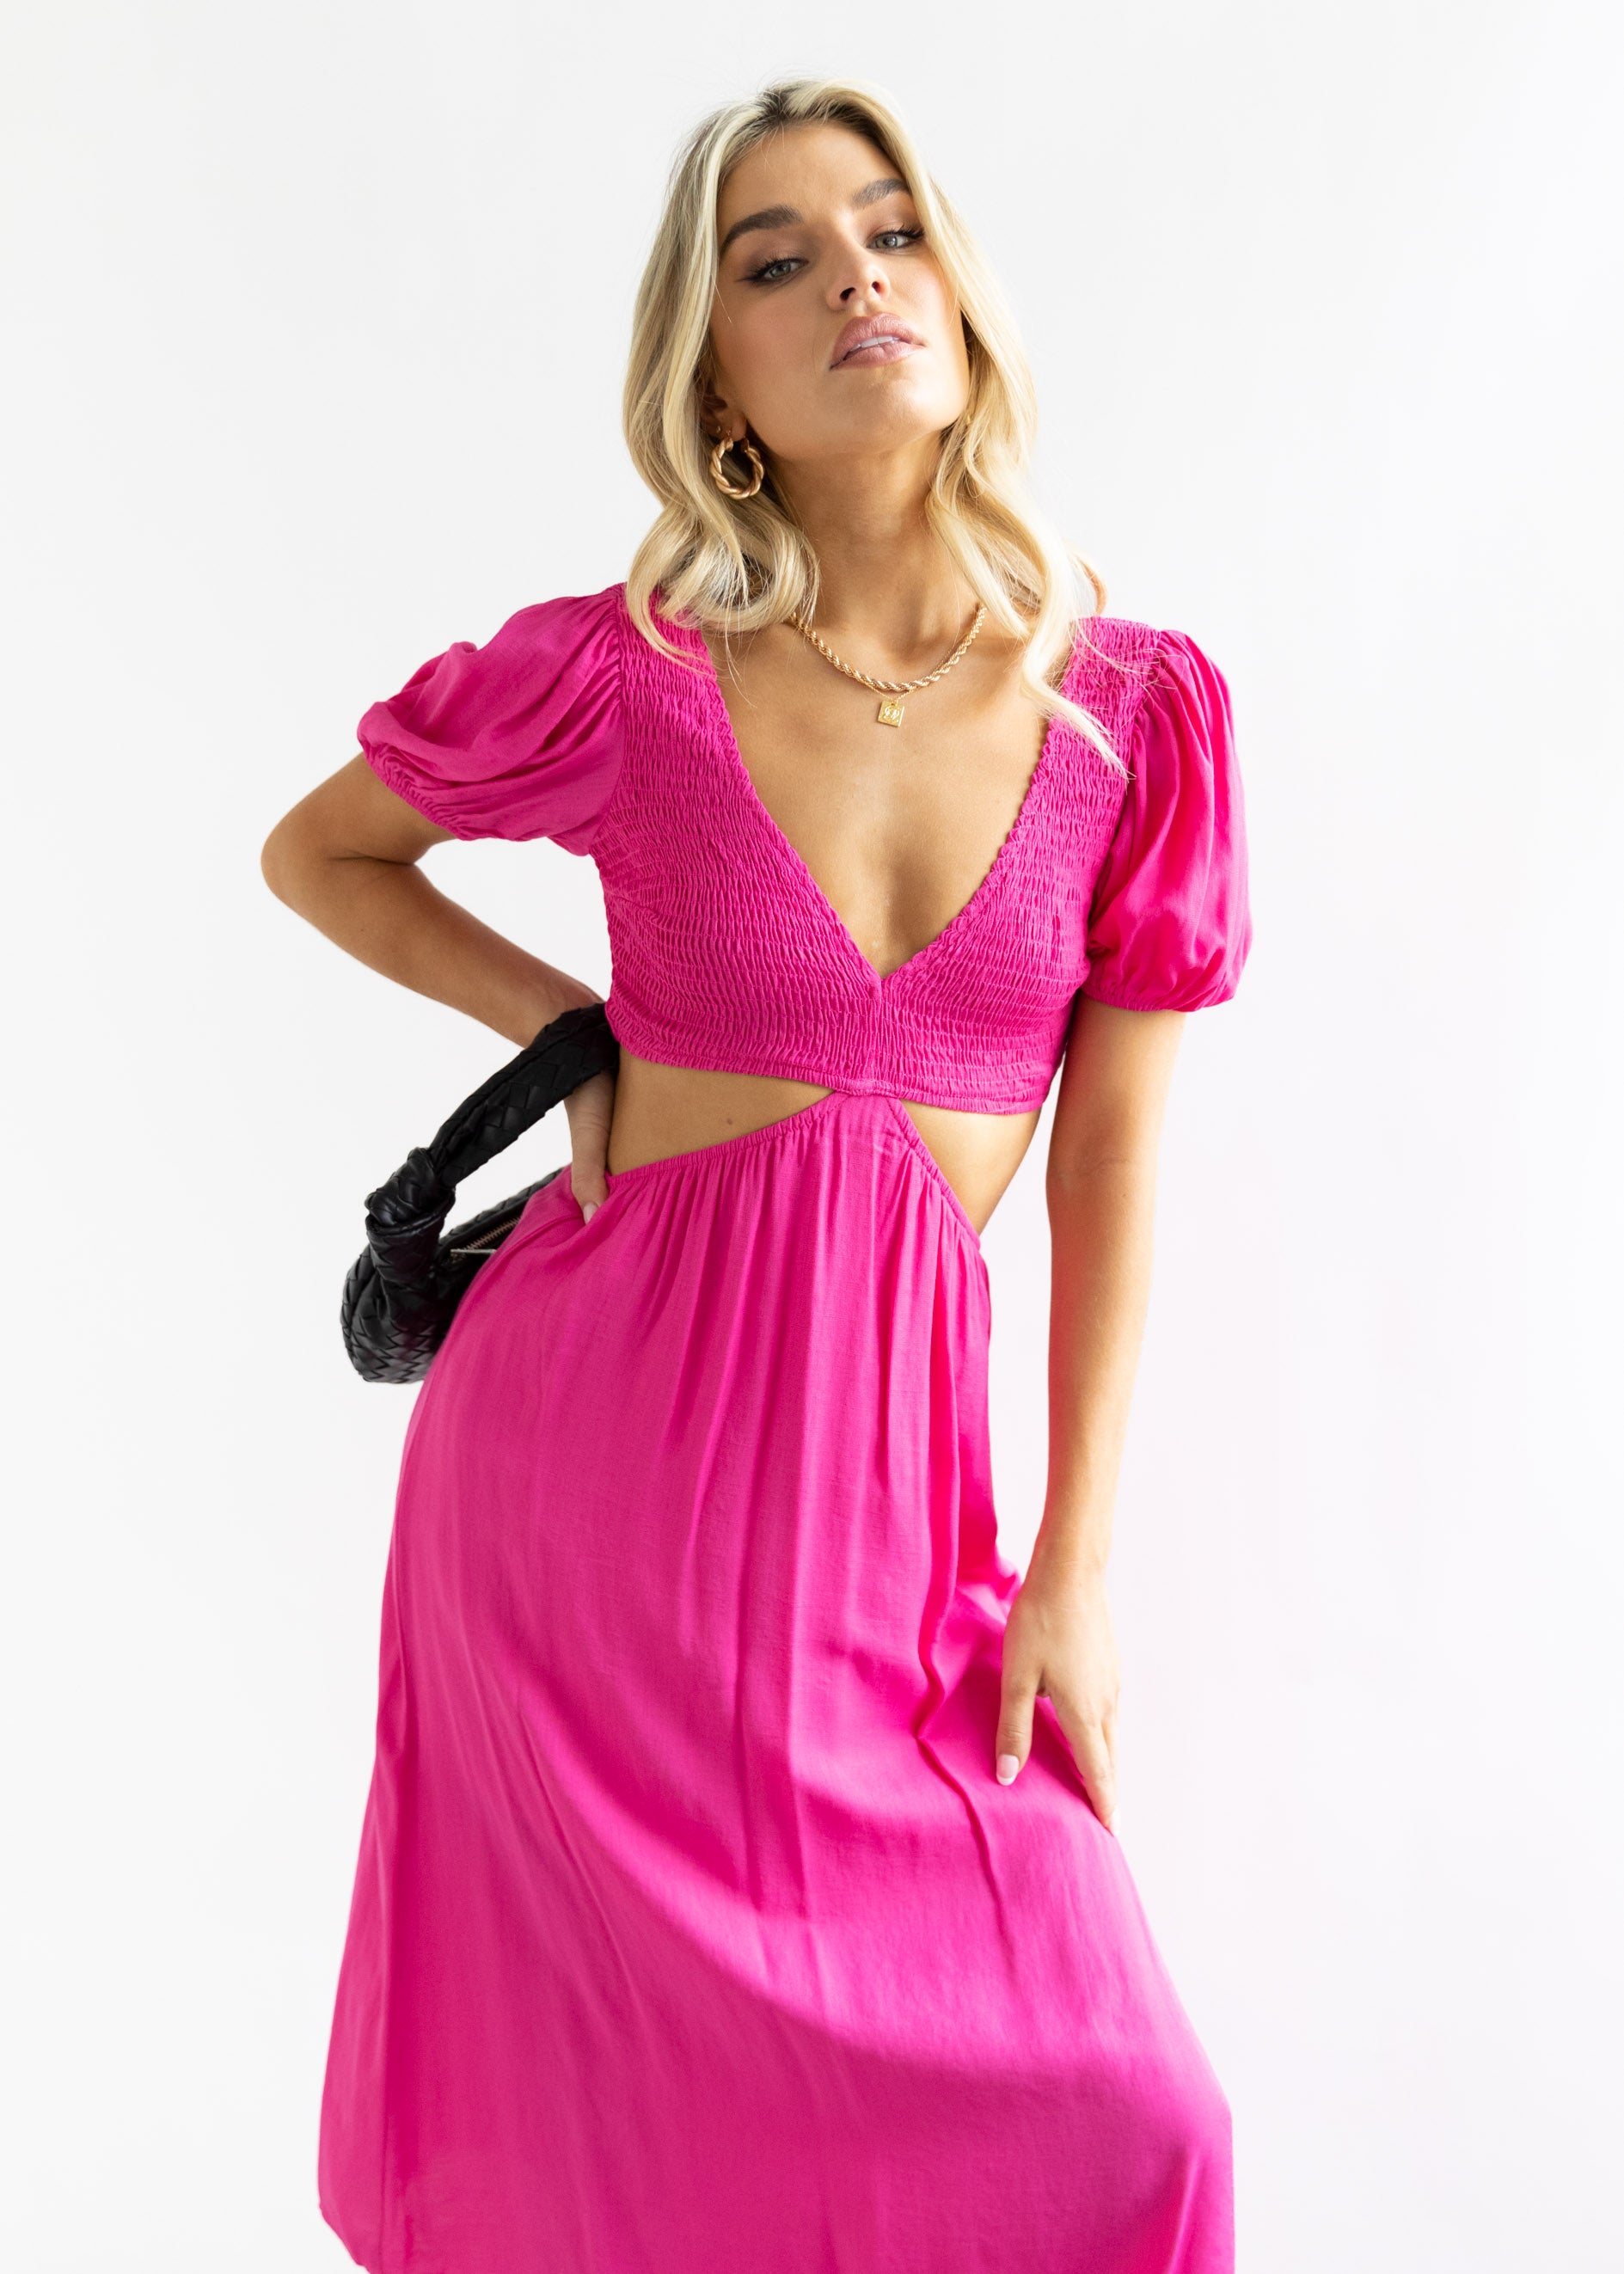 Lee Cut-Out Midi Dress - Hot Pink